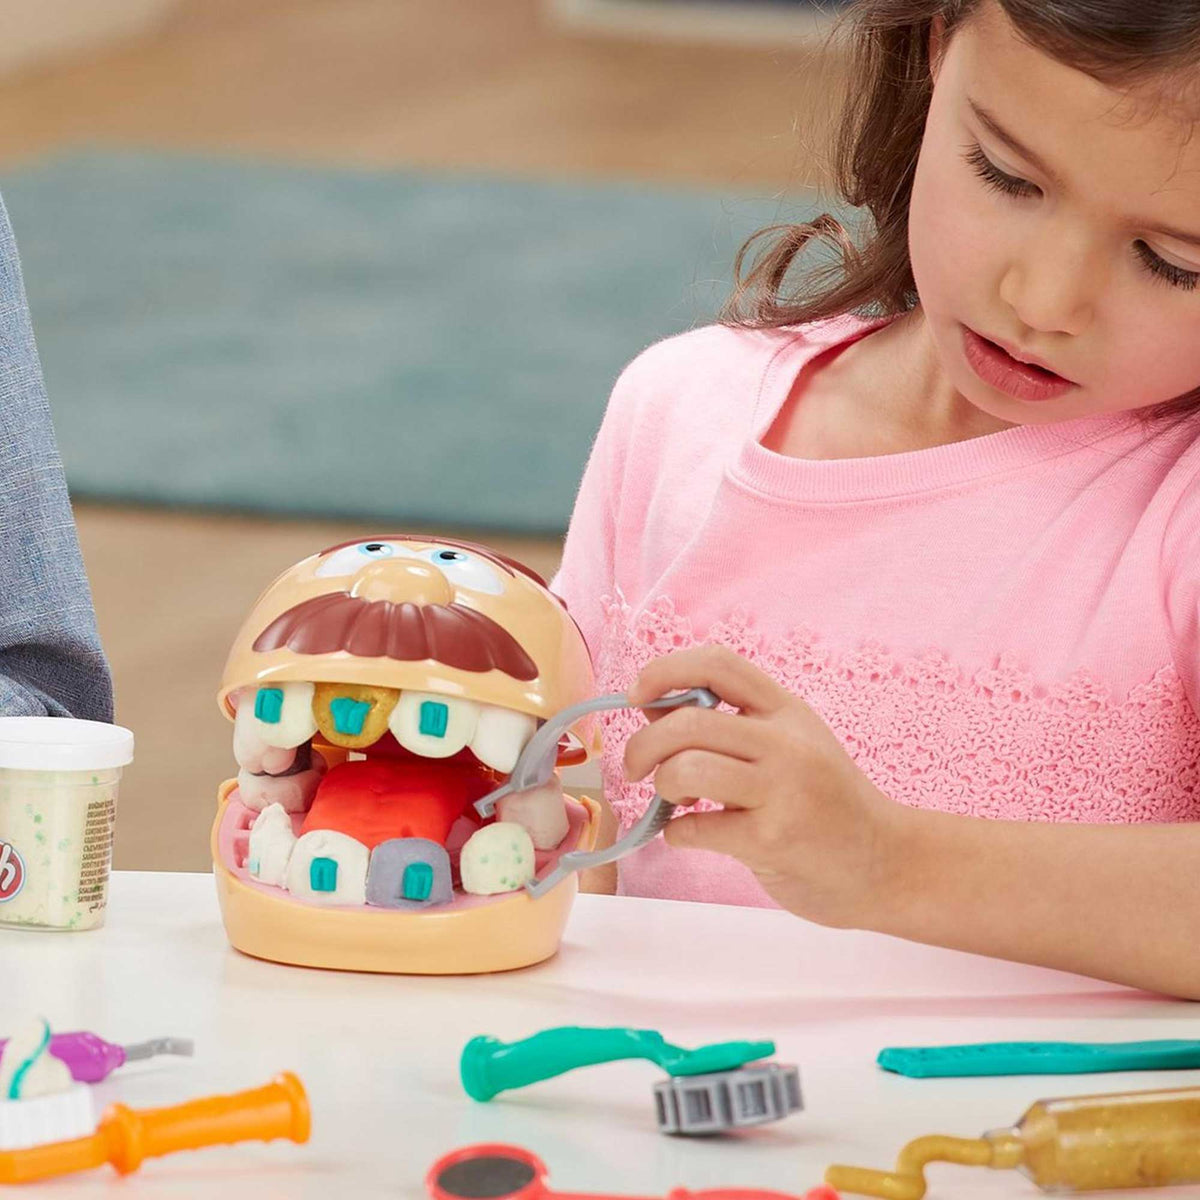 Play-Doh Drill ‘n’ Fill Dentist Playset